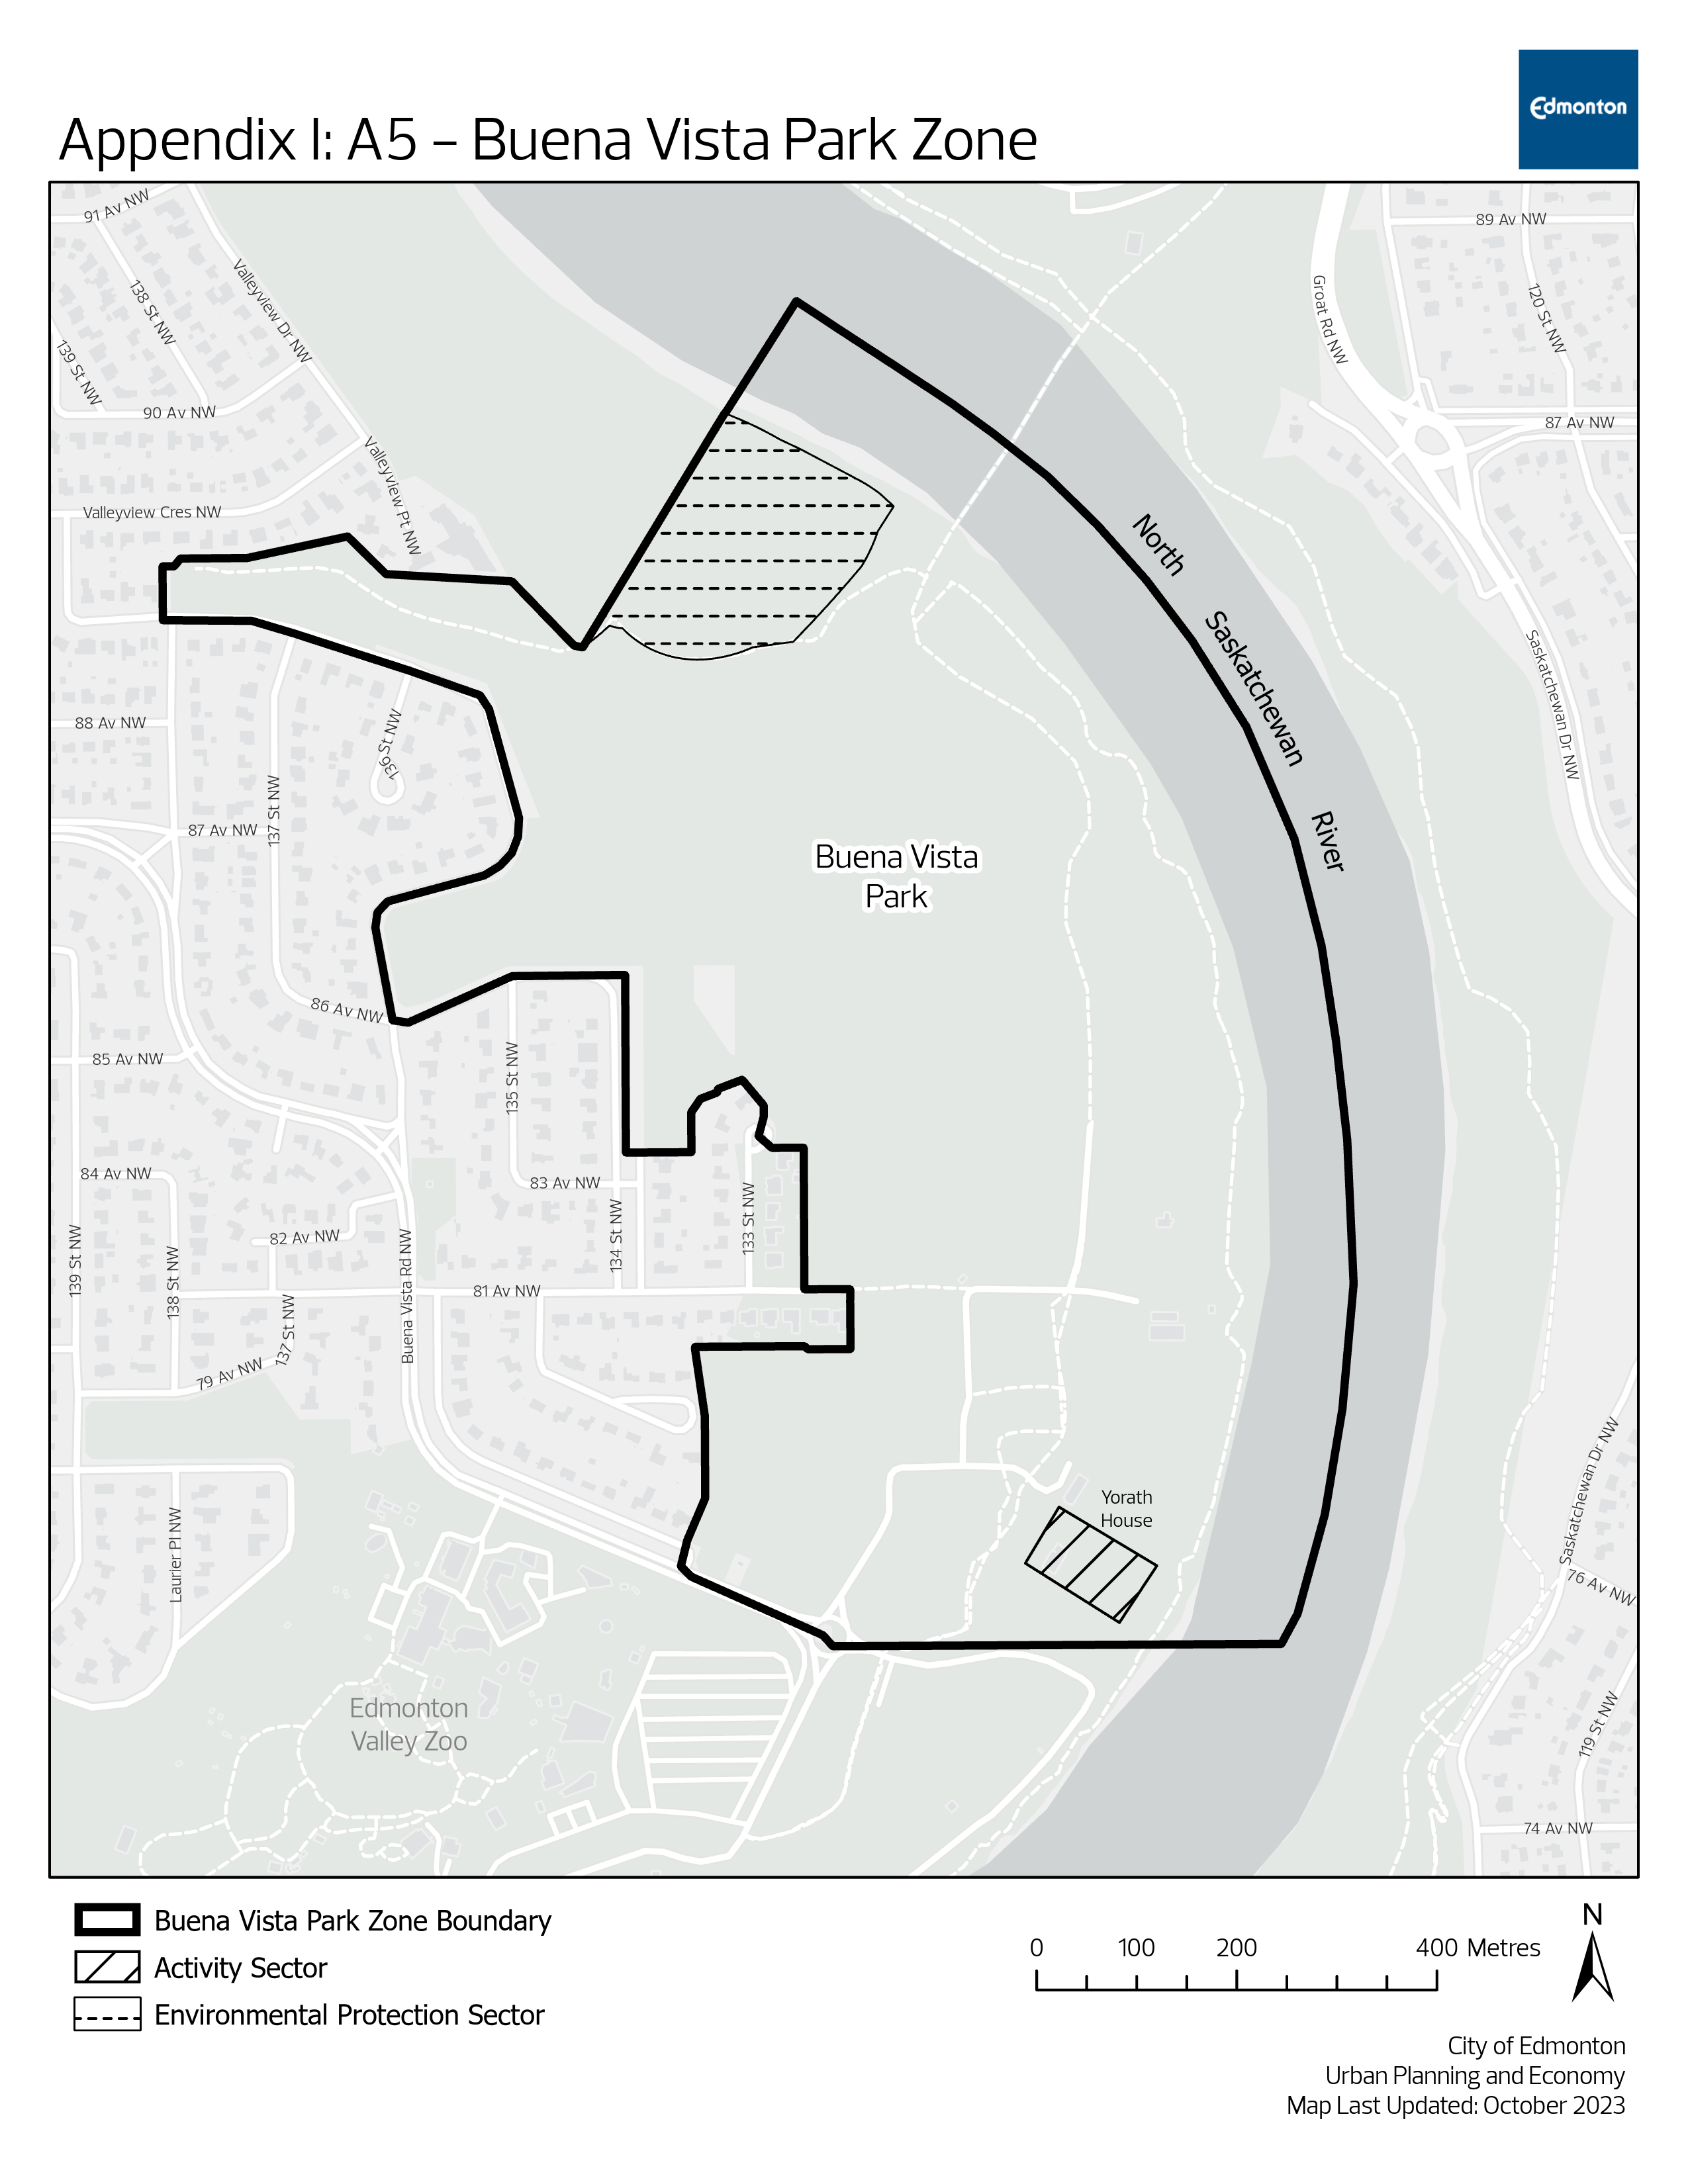 A5 - Buena Vista Park Zone map